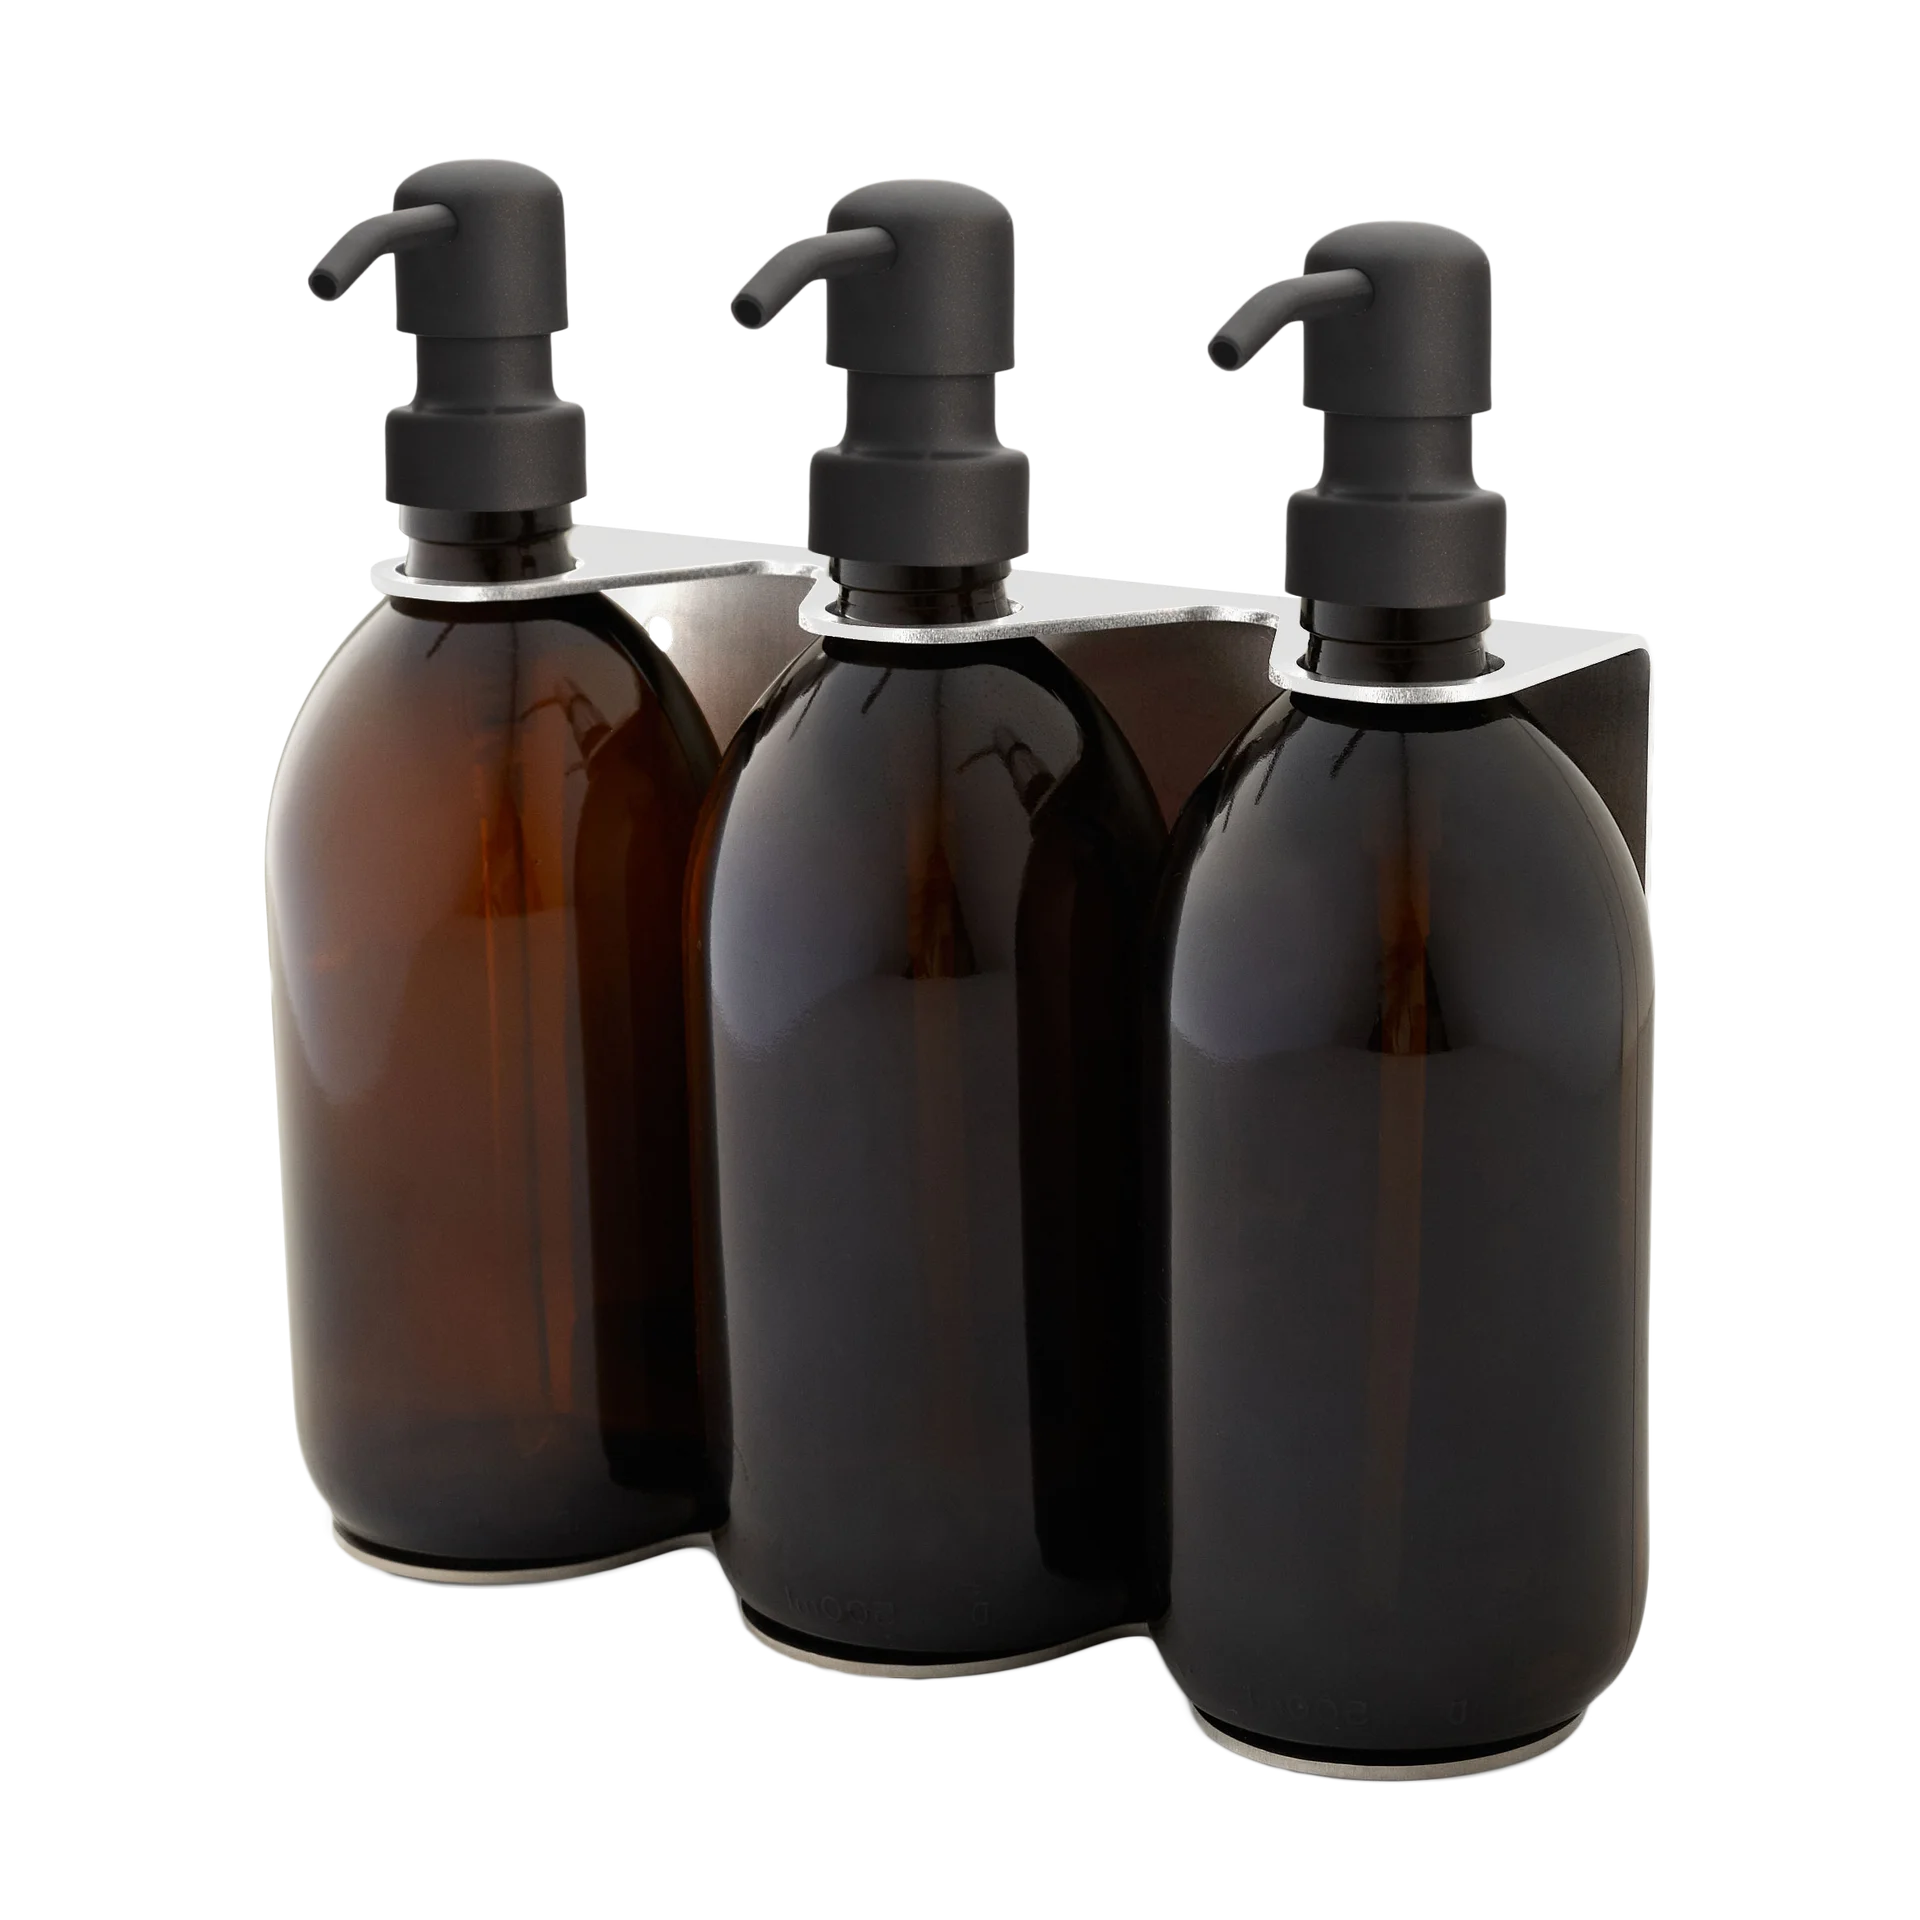 Chrome Triple Wall Mounted Soap Dispenser 250ml Amber Bottles and Black Pump